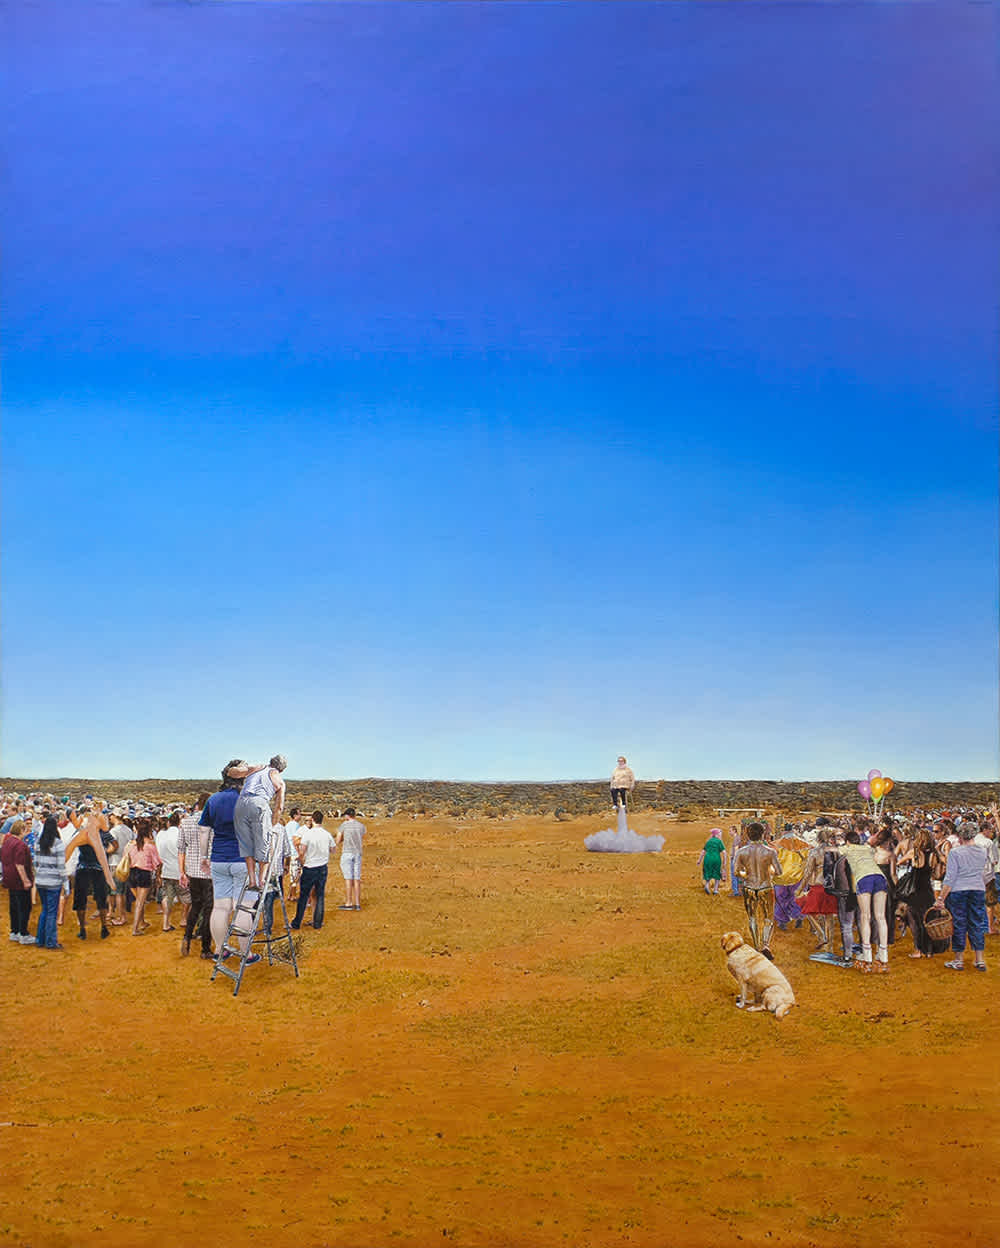 desert-crowd-dog-takeoff-painting